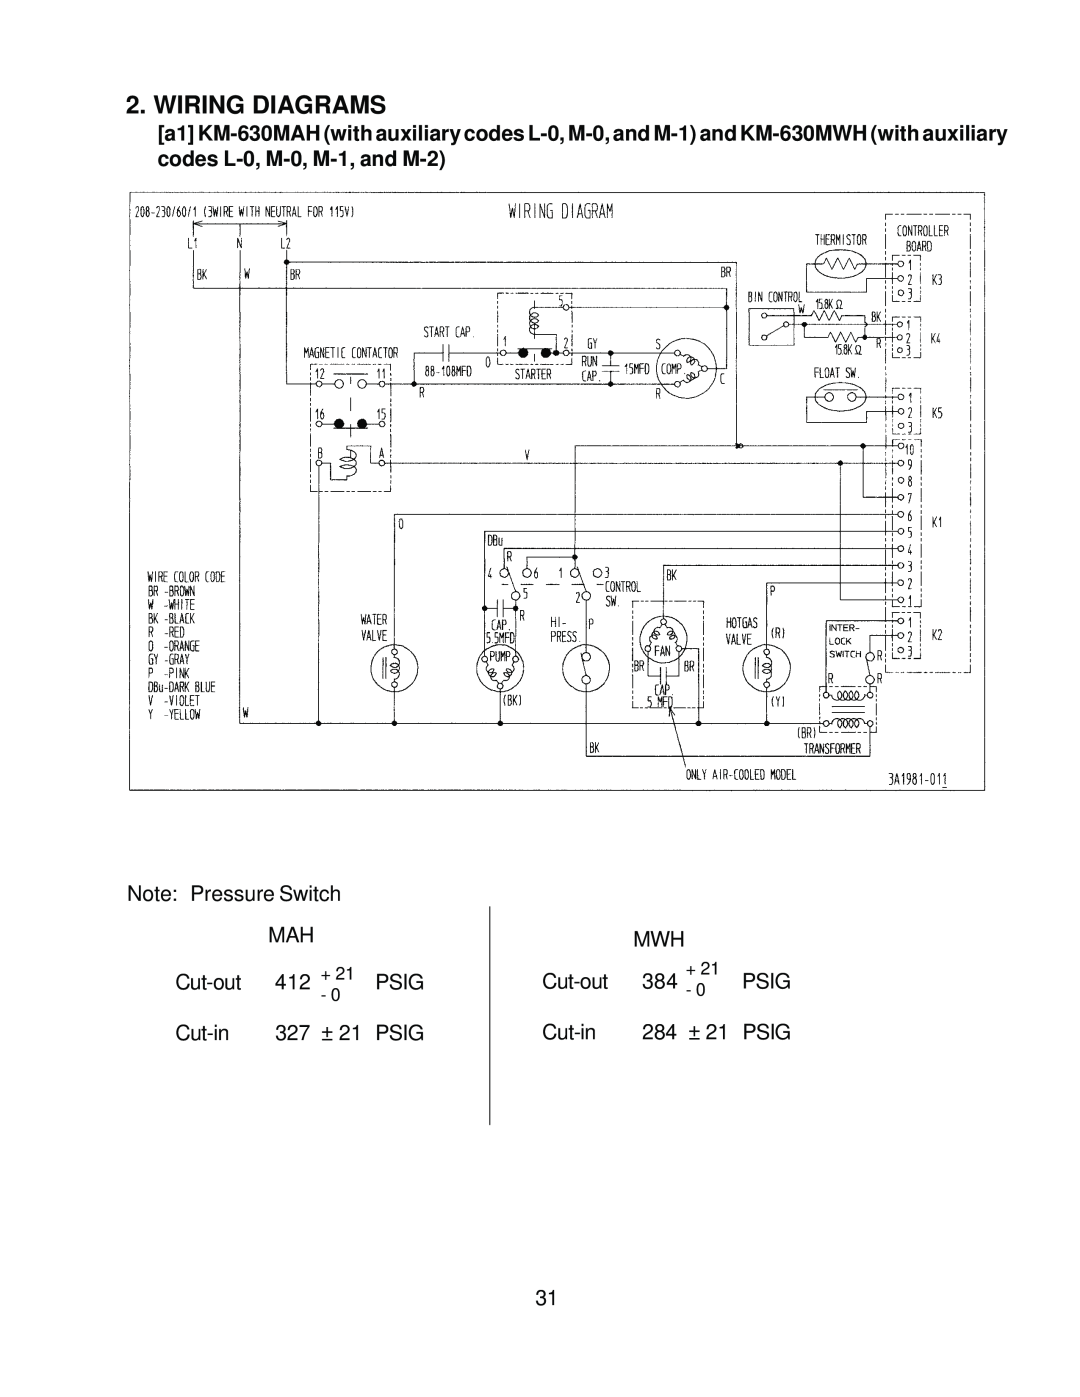 Hoshizaki KM-630MRH, KM-630MWH, KM-630MAH service manual Wiring Diagrams 